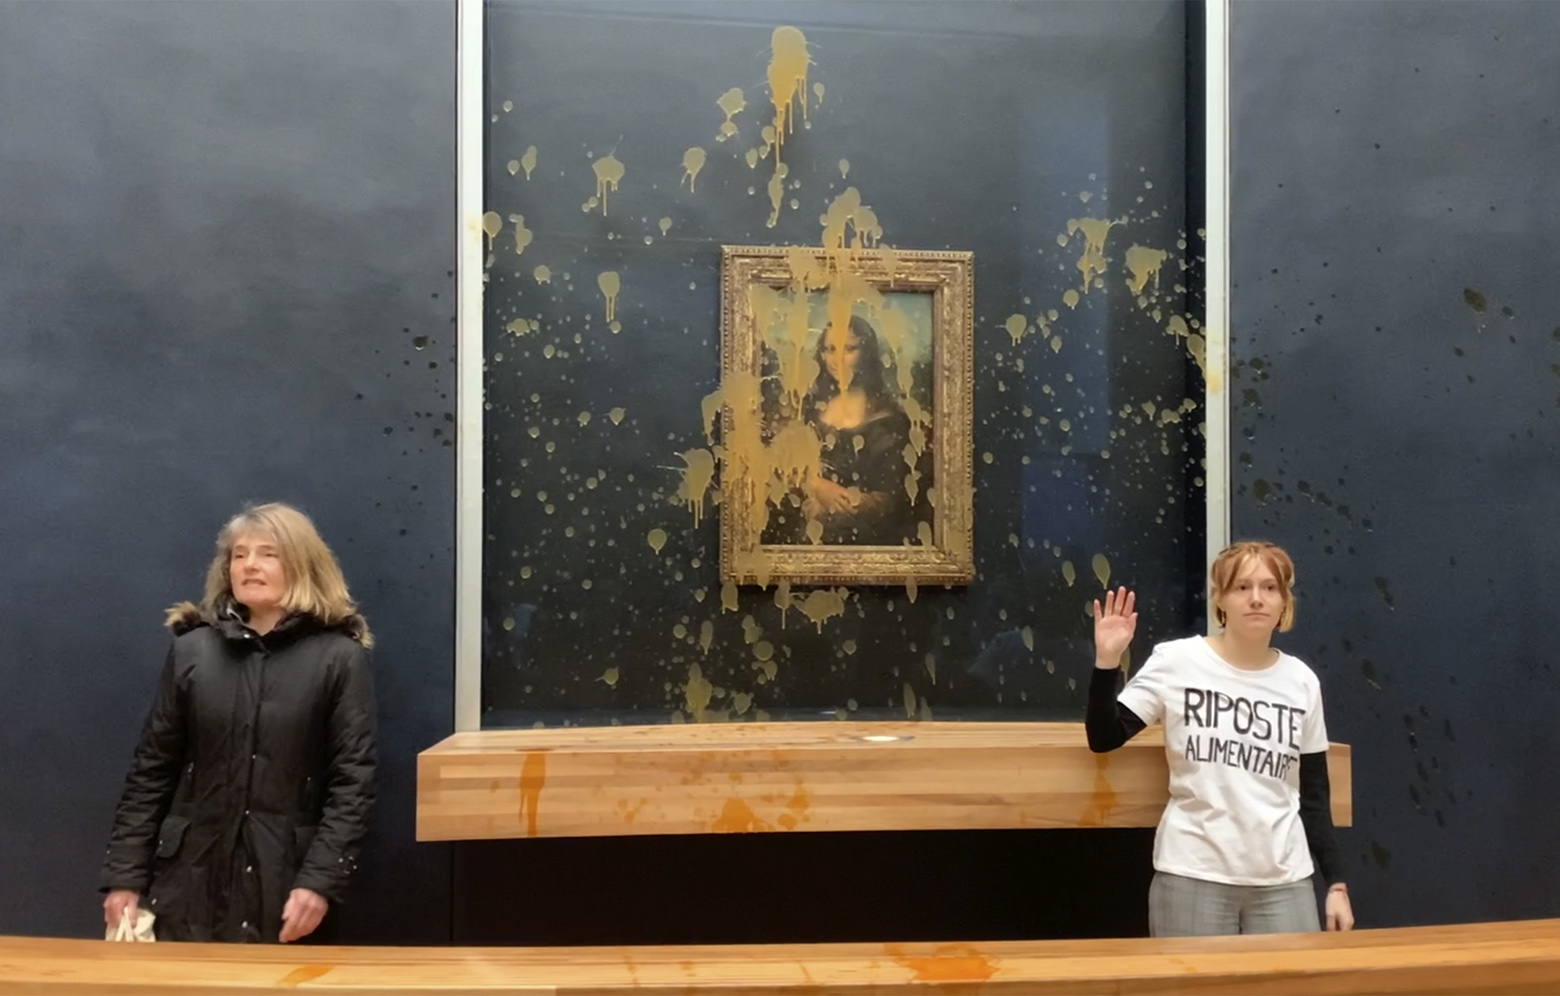 Hunger activists splash soup on ‘Mona Lisa’ in Paris museum